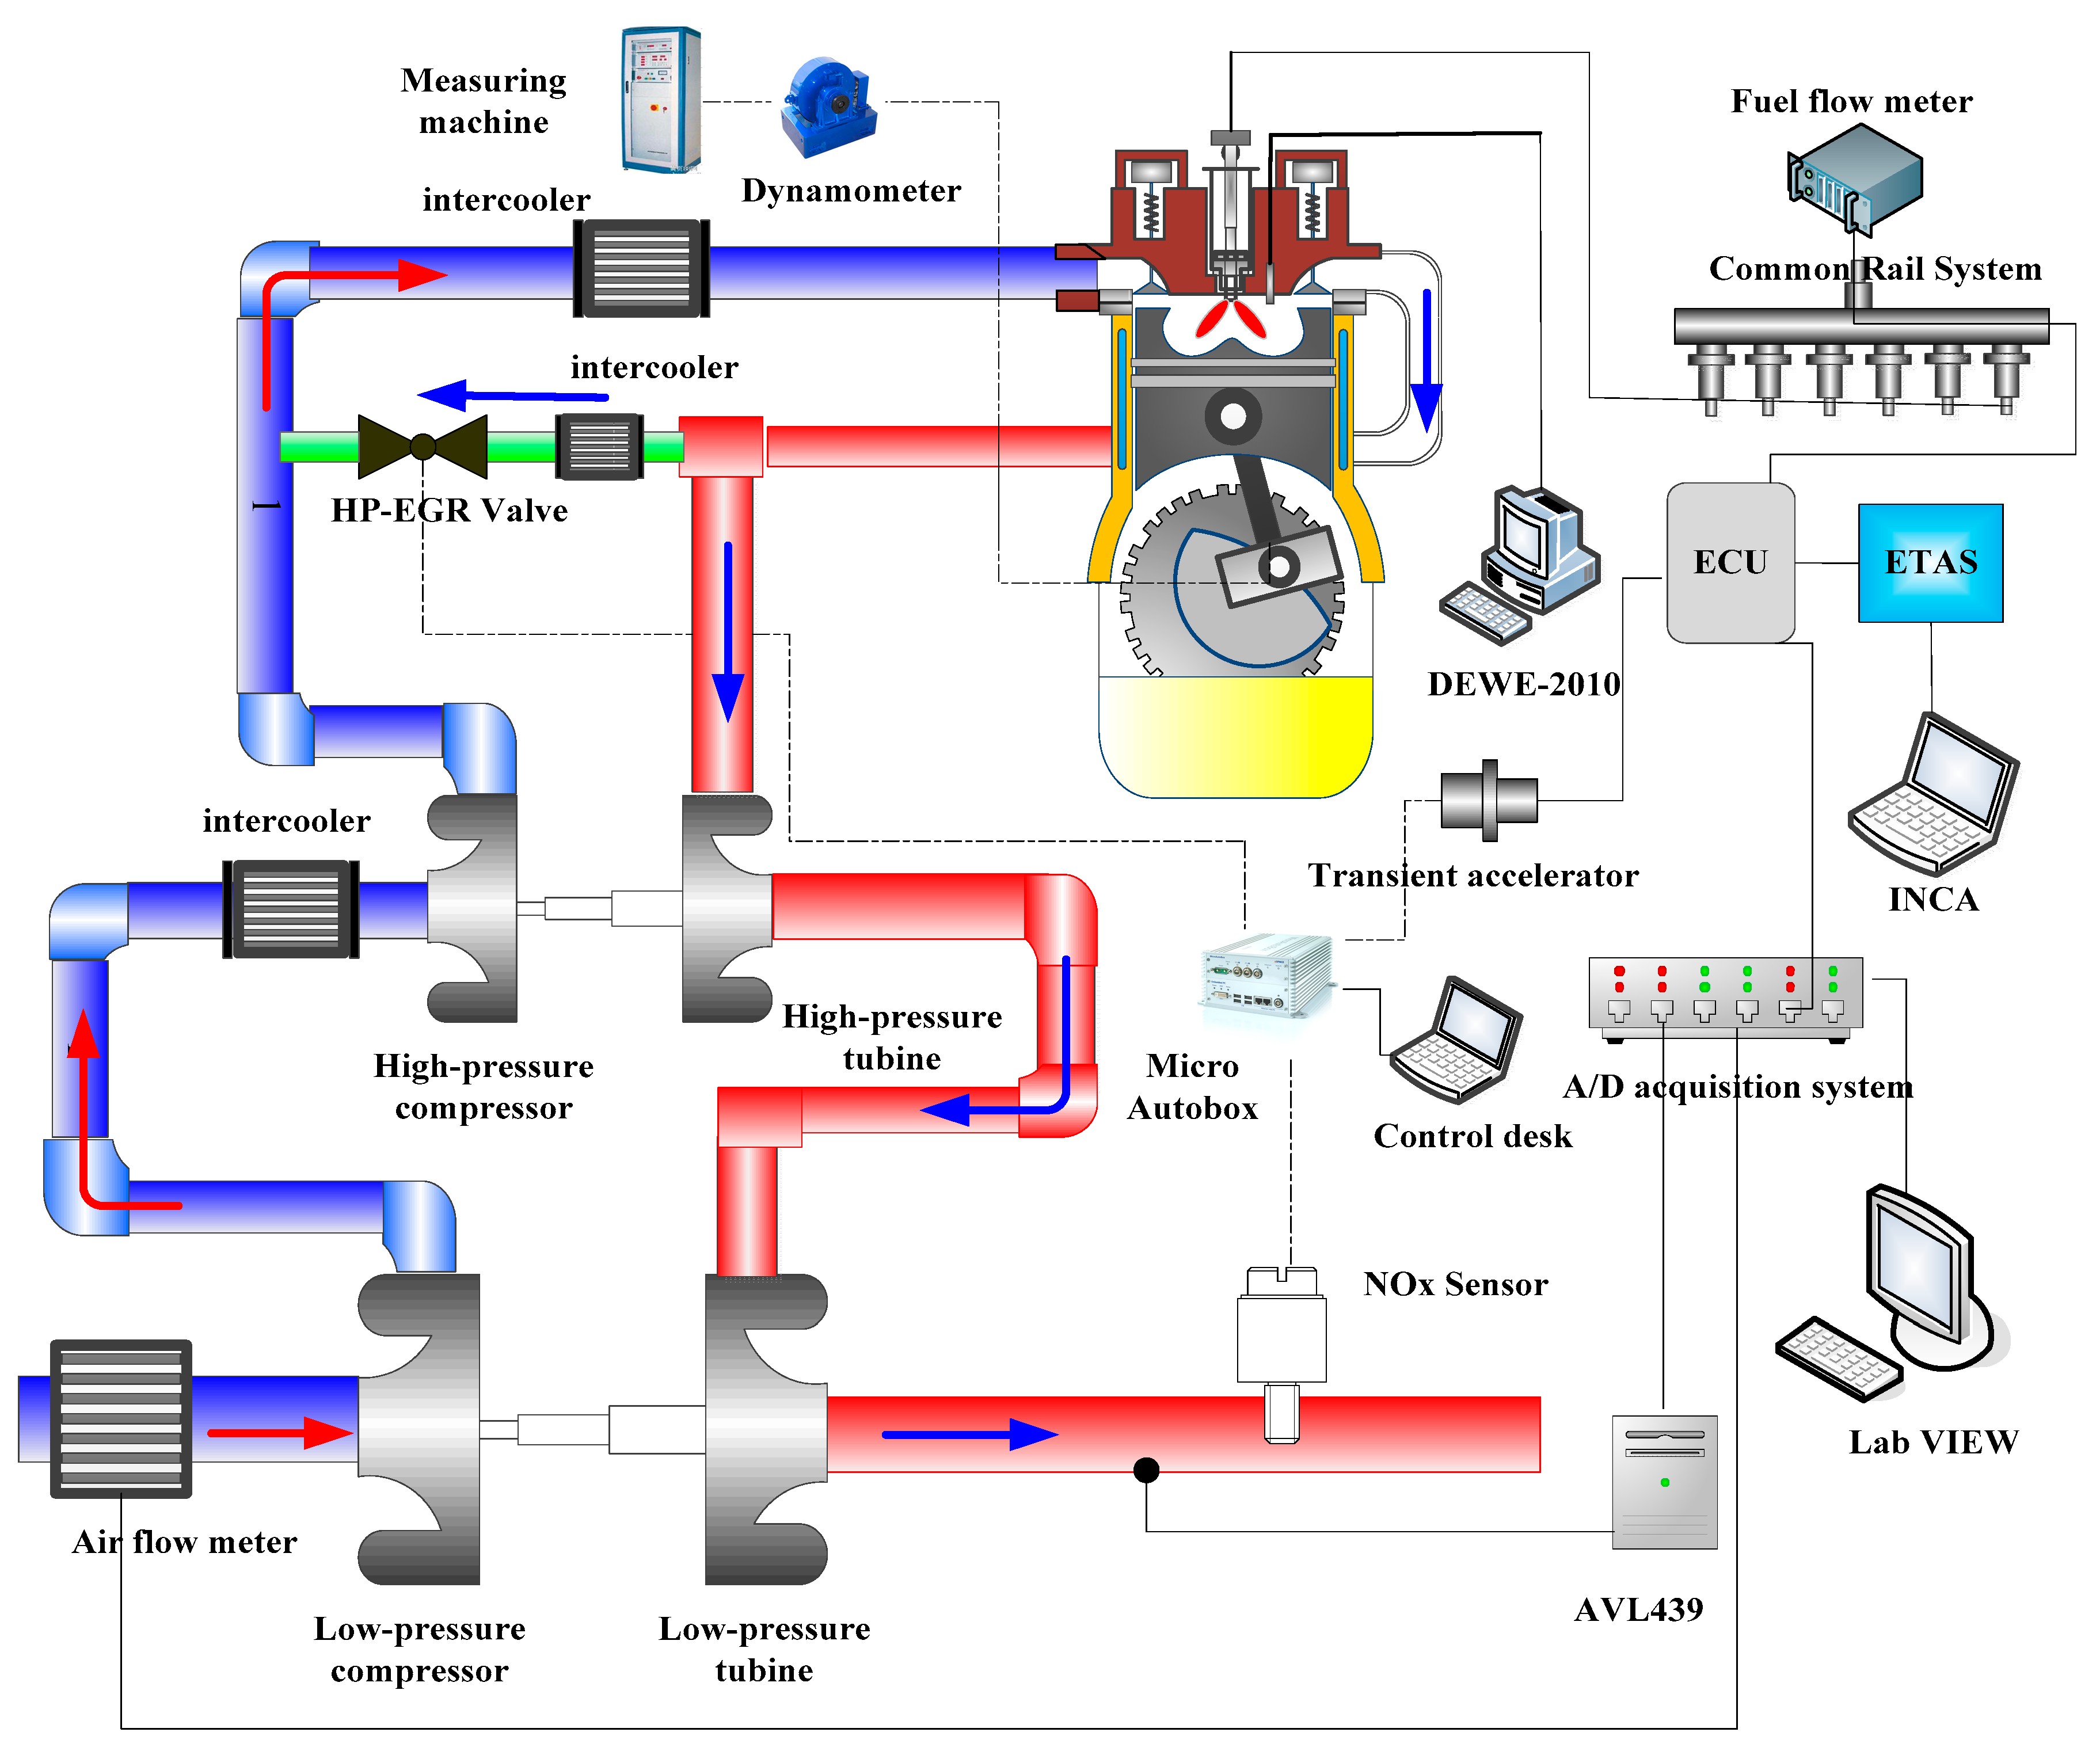 Turbocharged Engine Diagram Energies Free Full Text Of Turbocharged Engine Diagram